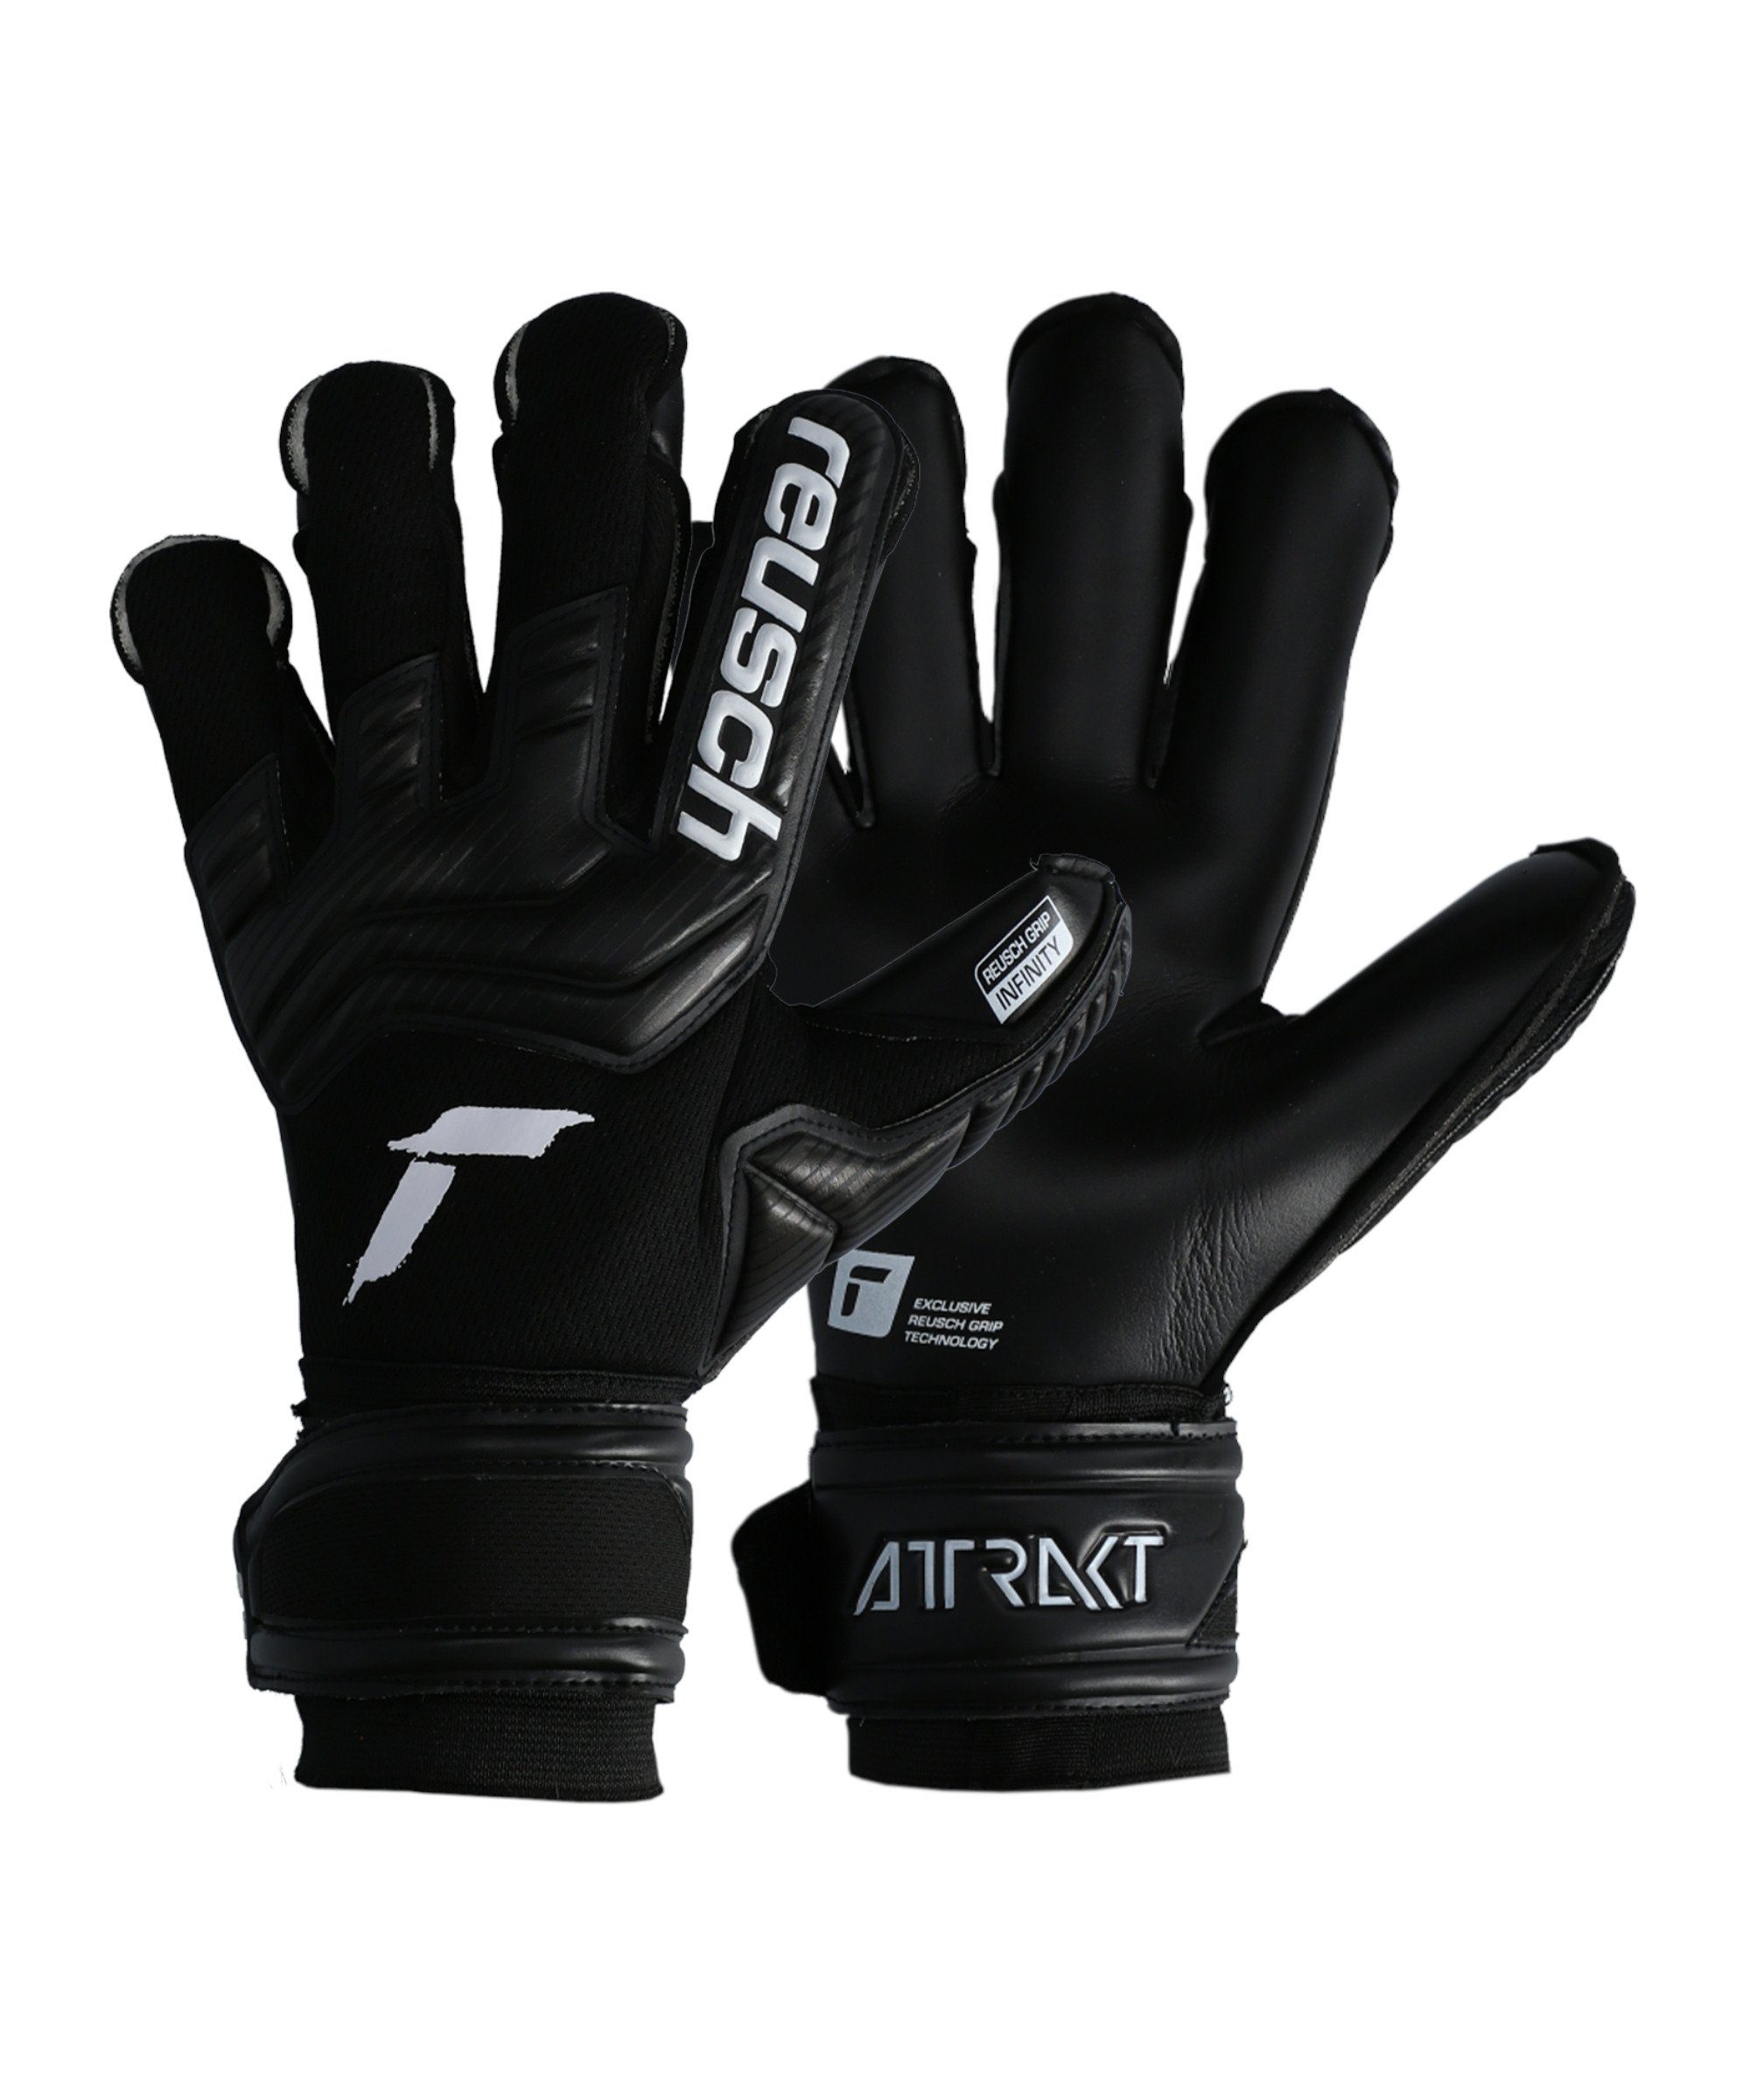 Beliebte Artikel in diesem Monat Reusch Torwarthandschuhe Attrakt Infinity Alpha Blackout TW-Handschuhe